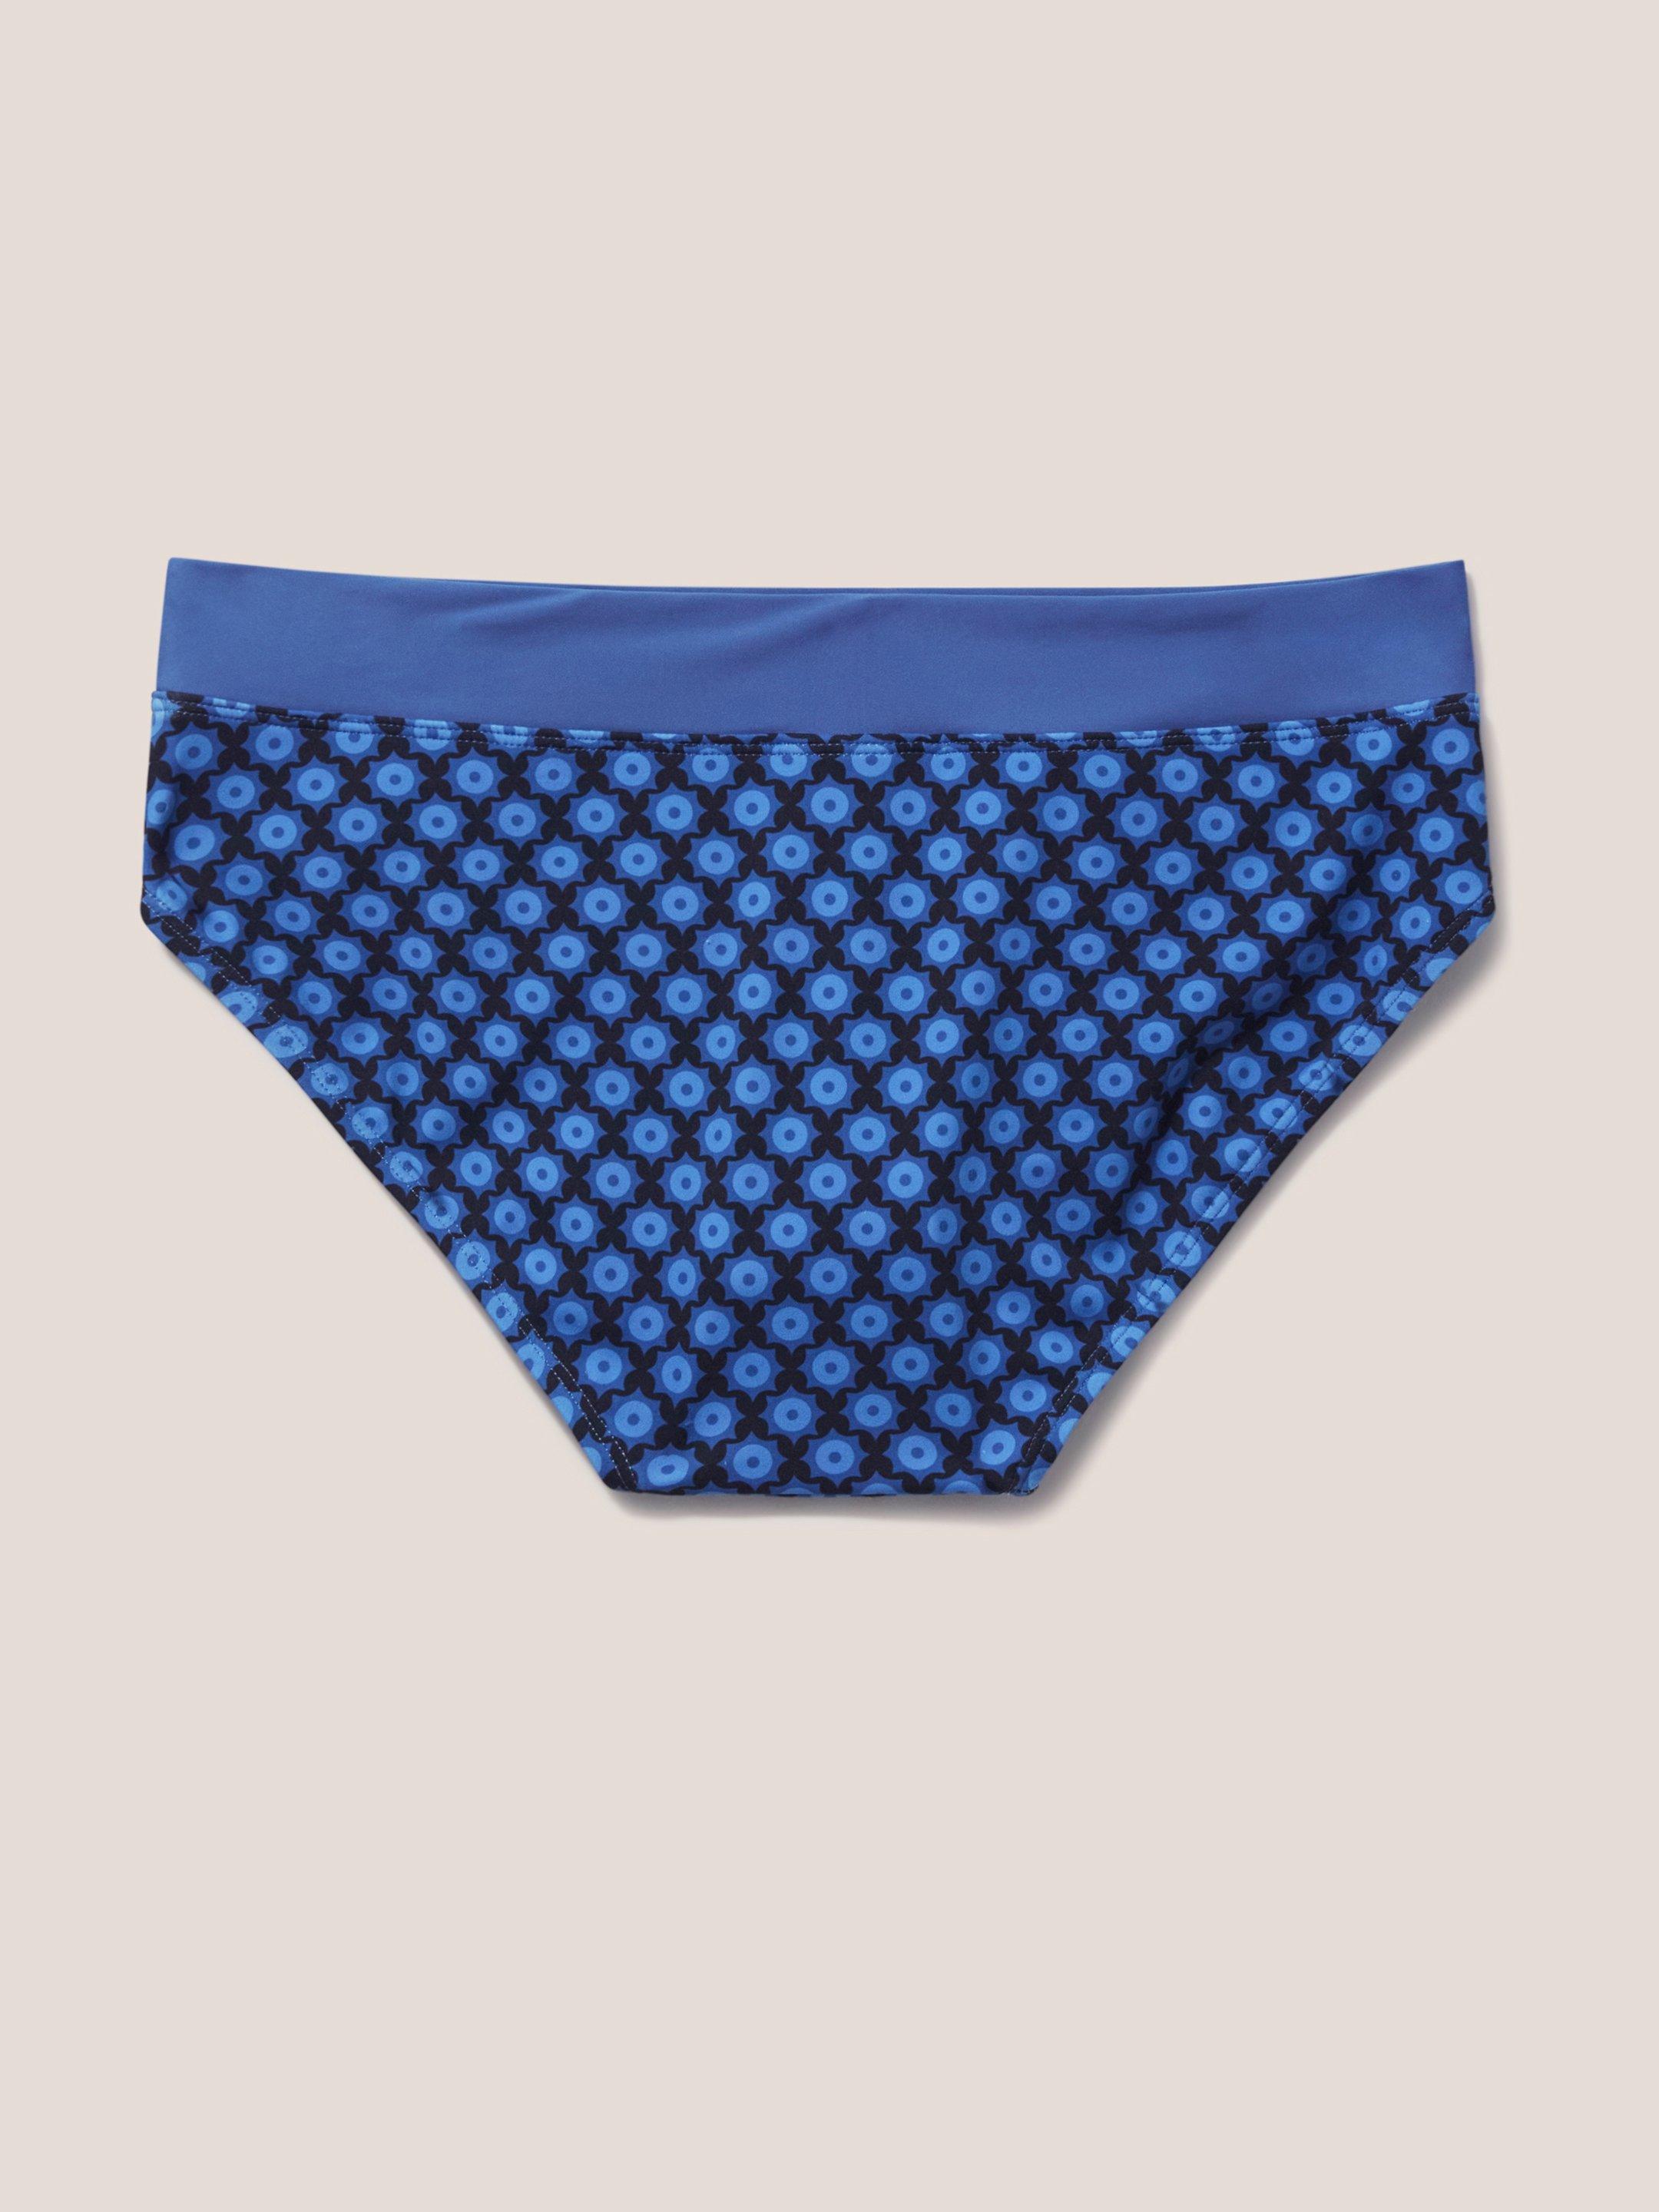 Tally Classic Bikini Bottom in BLUE MLT - FLAT BACK